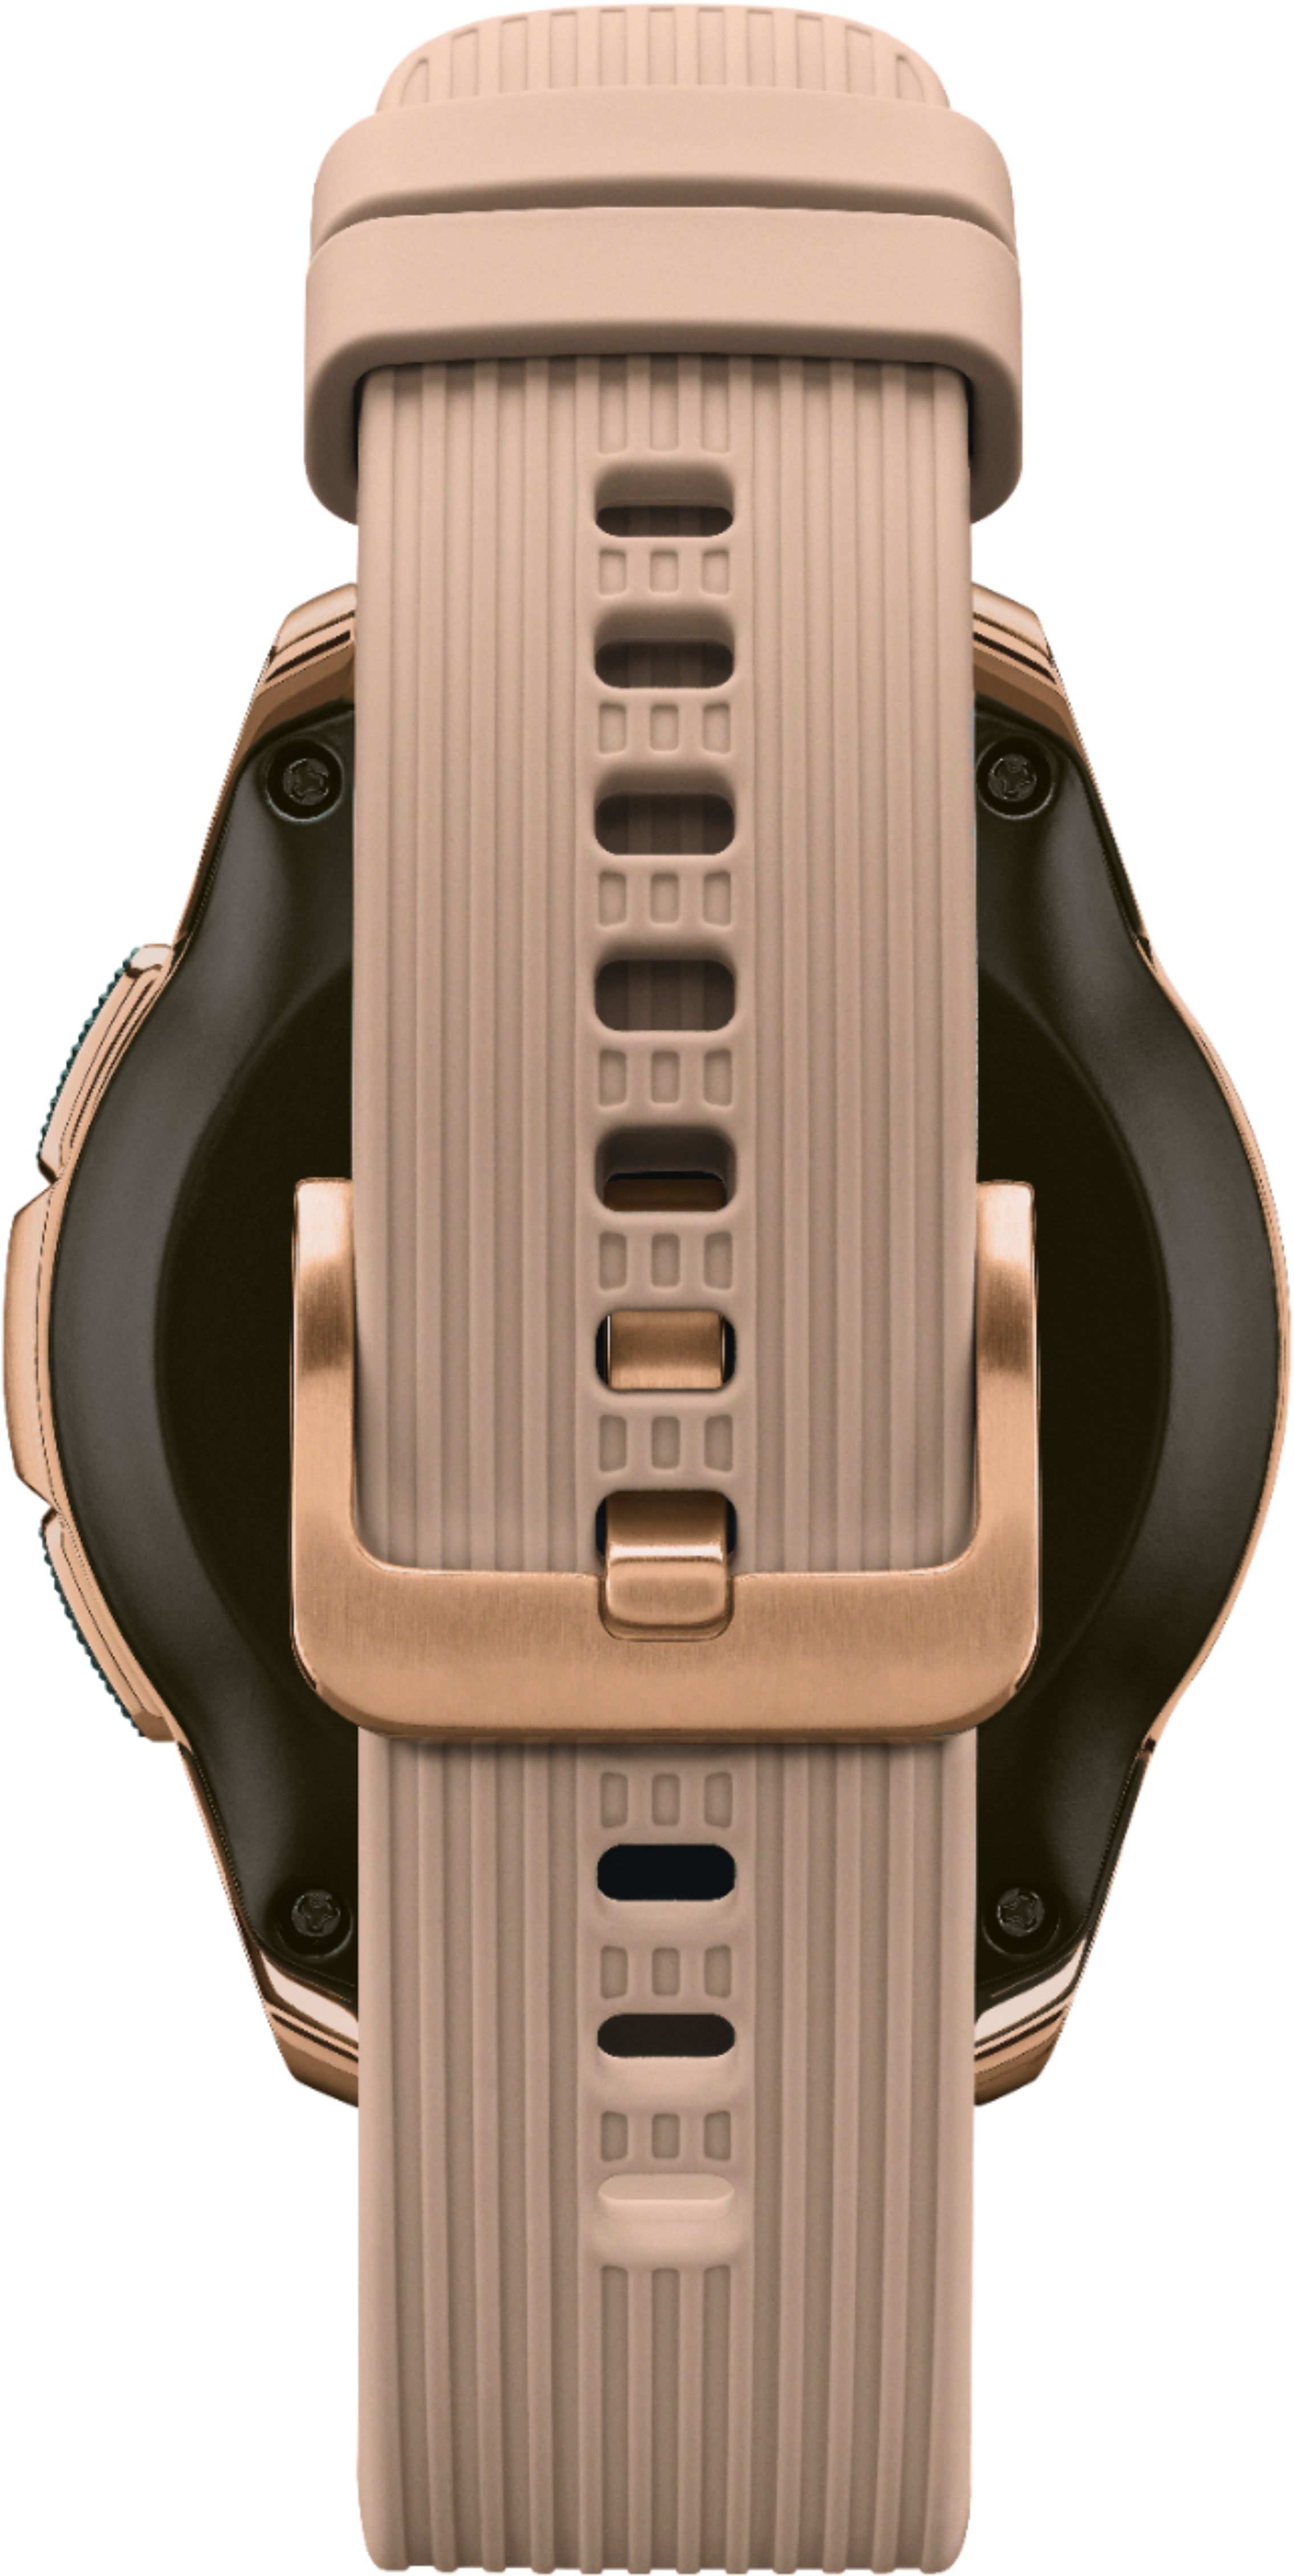 Customer Reviews: Samsung Galaxy Watch Smartwatch 42mm Stainless Steel